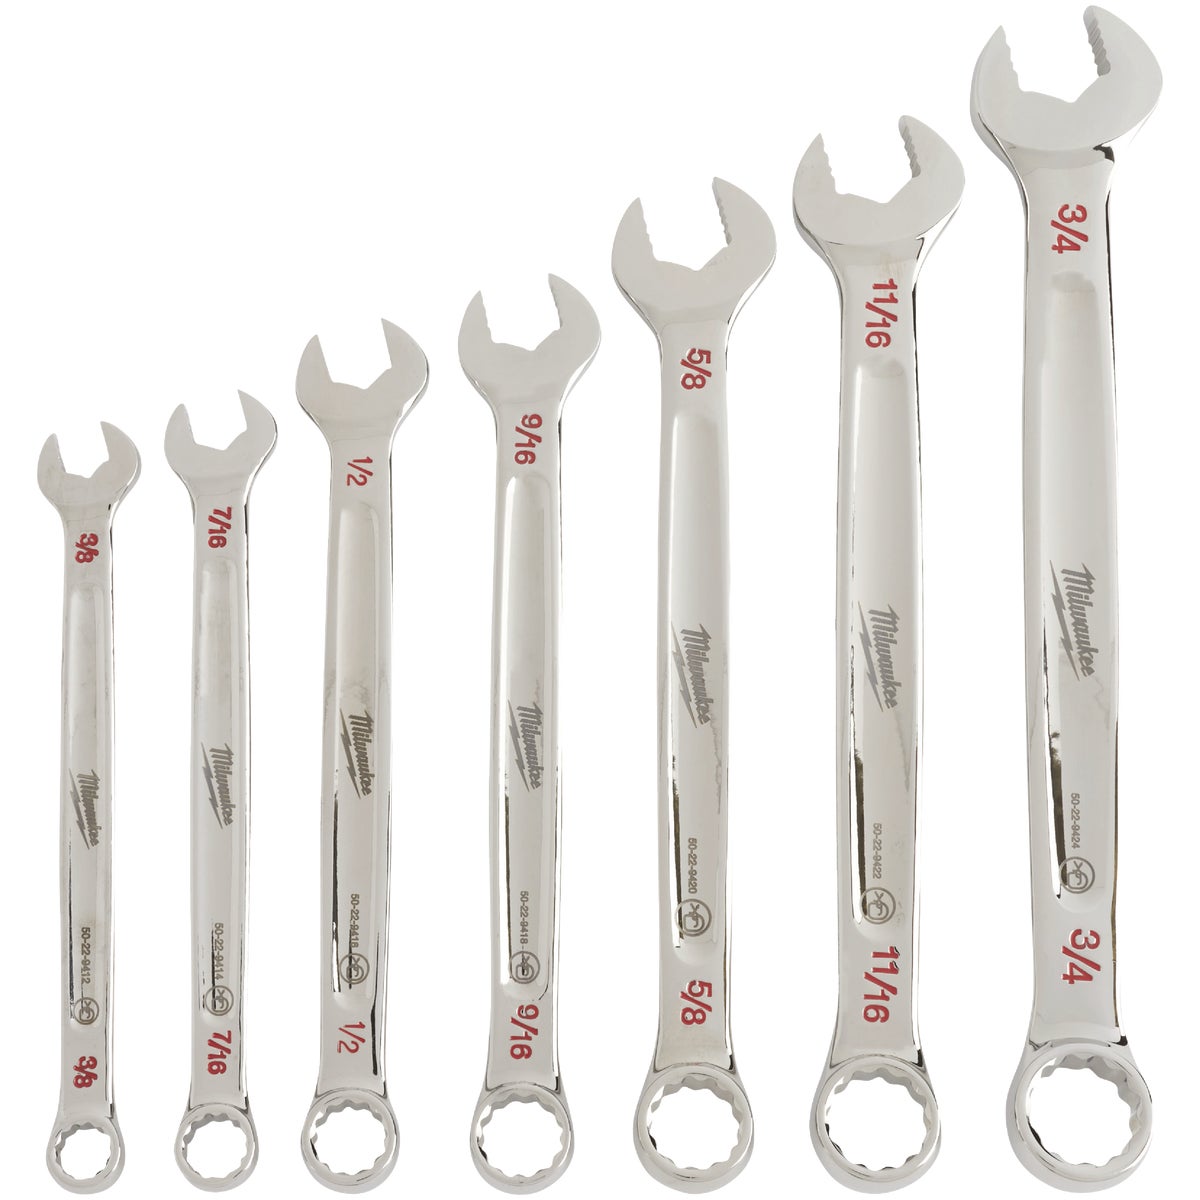 Milwaukee Standard 12-Point Combination Wrench Set (7-Piece)